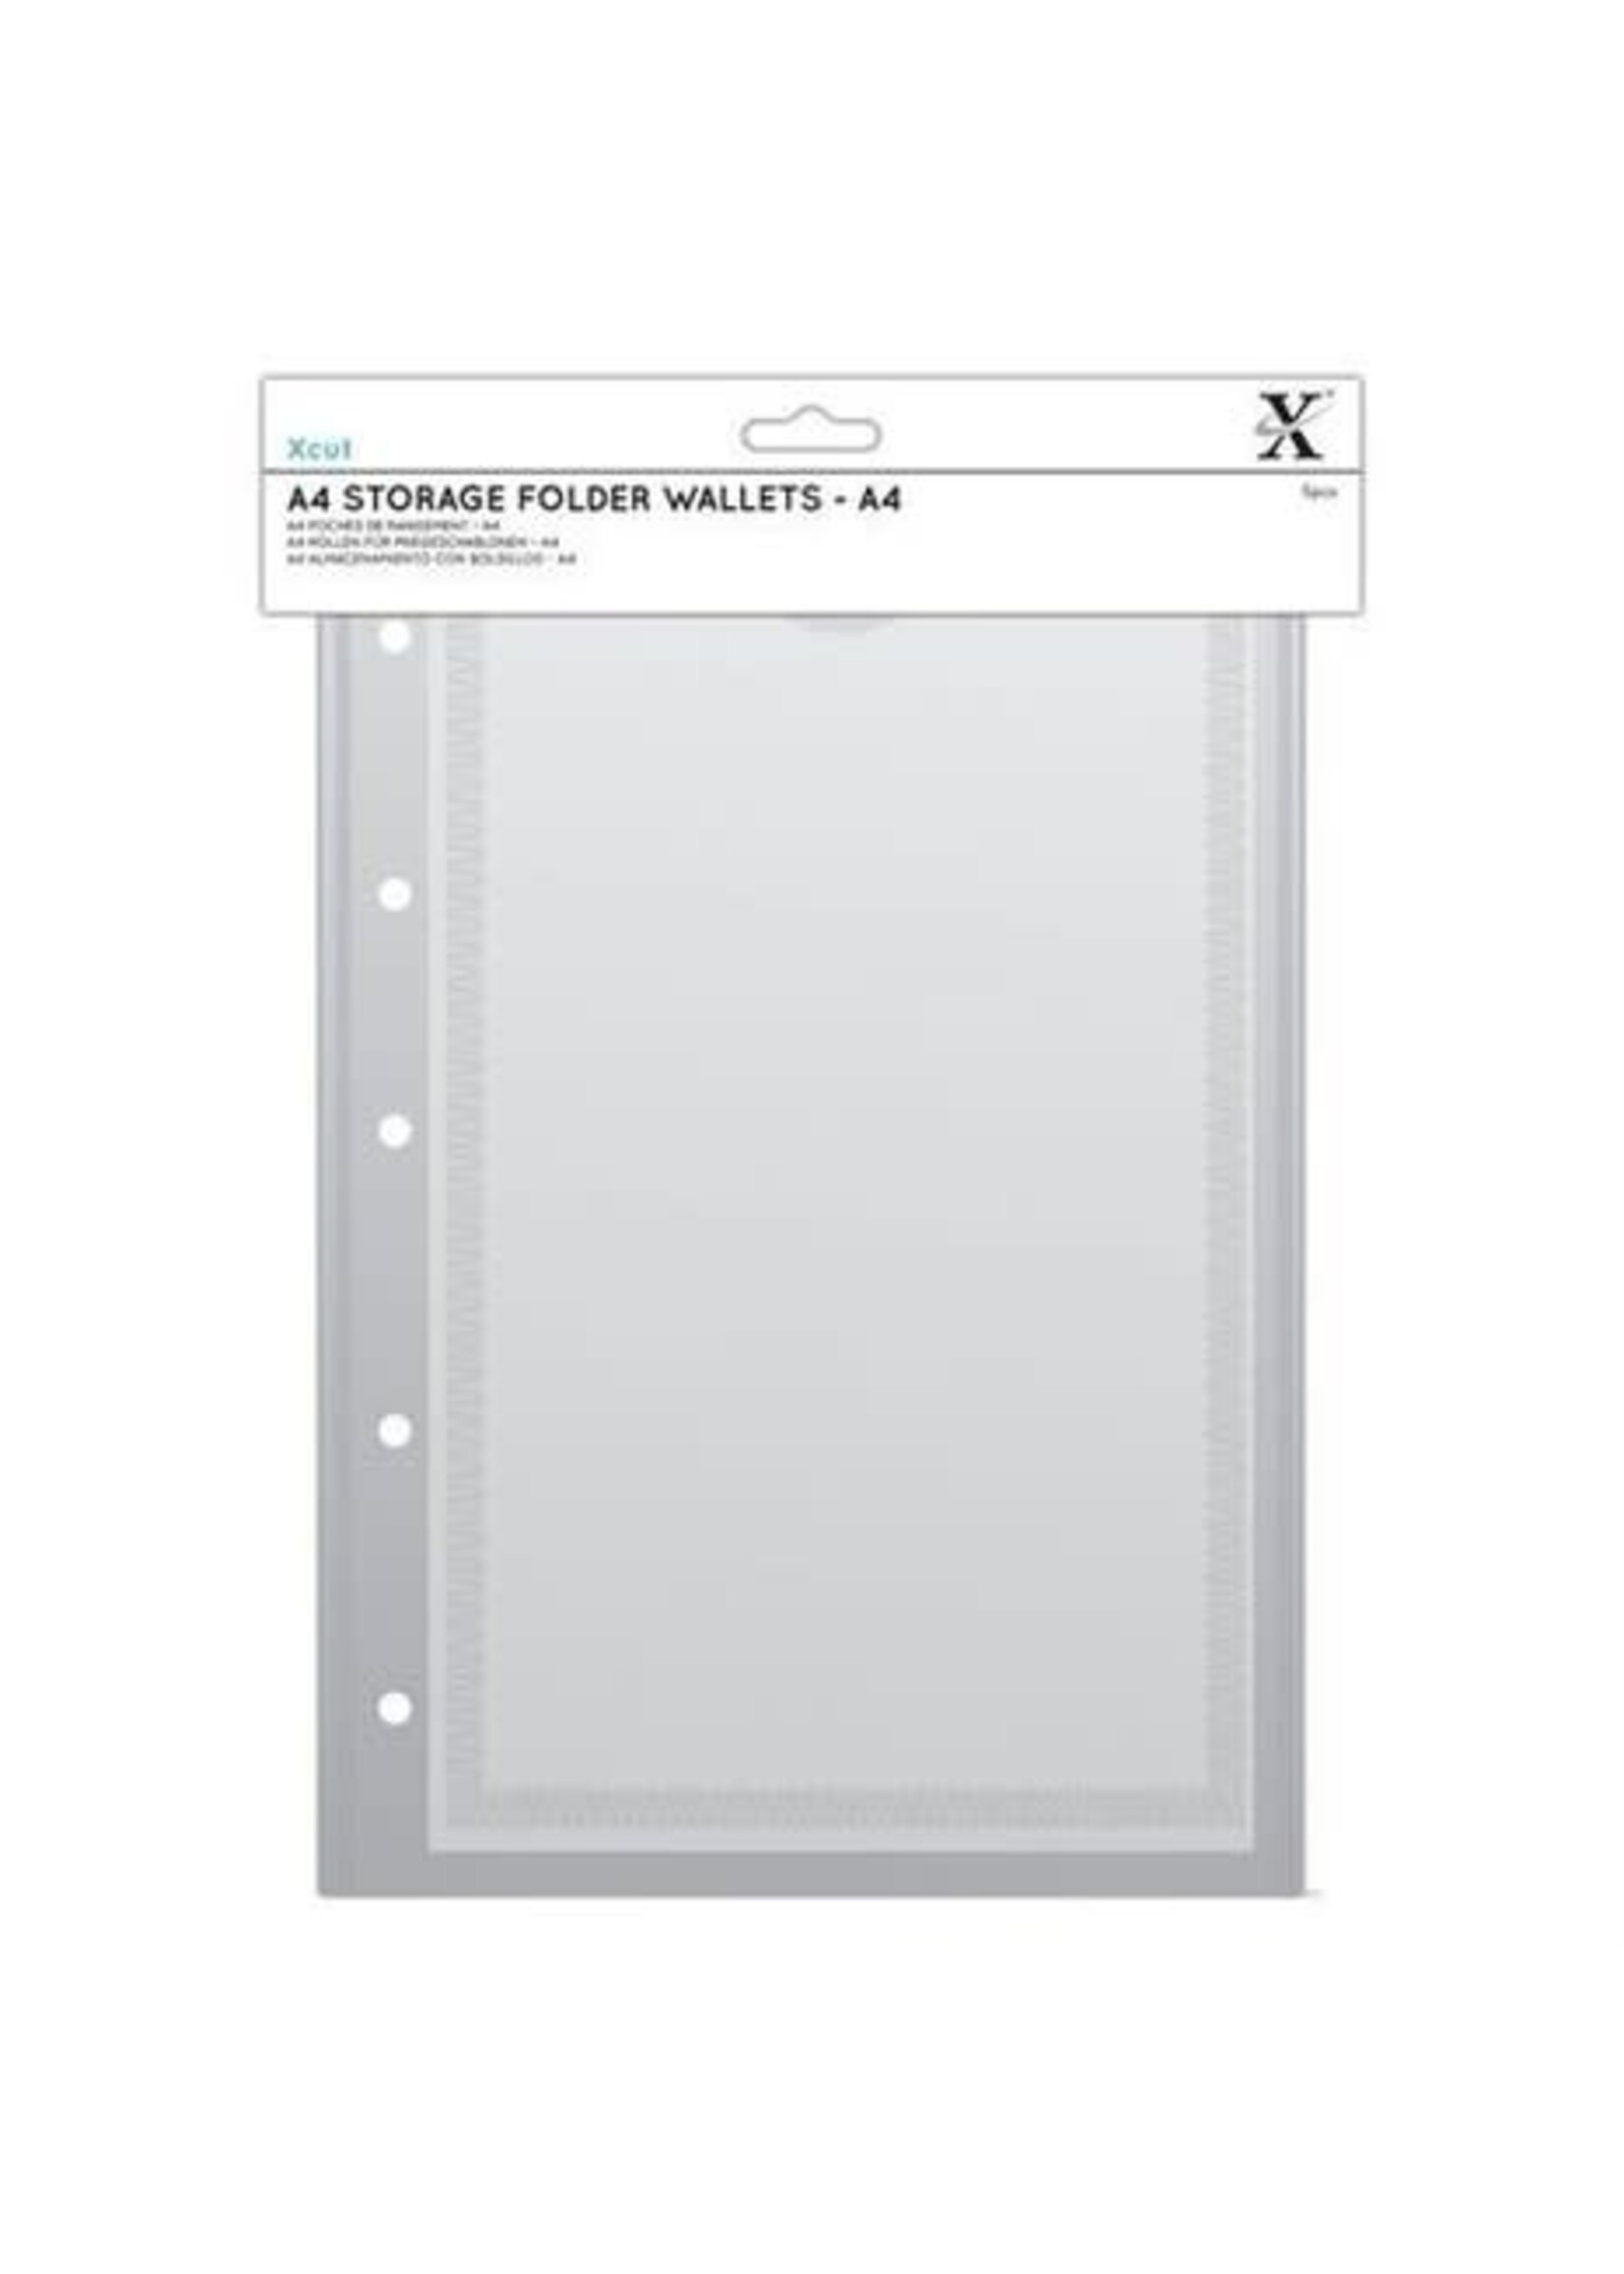 Xcut A4 Storage Folder Wallets A4 (XCU 245105)